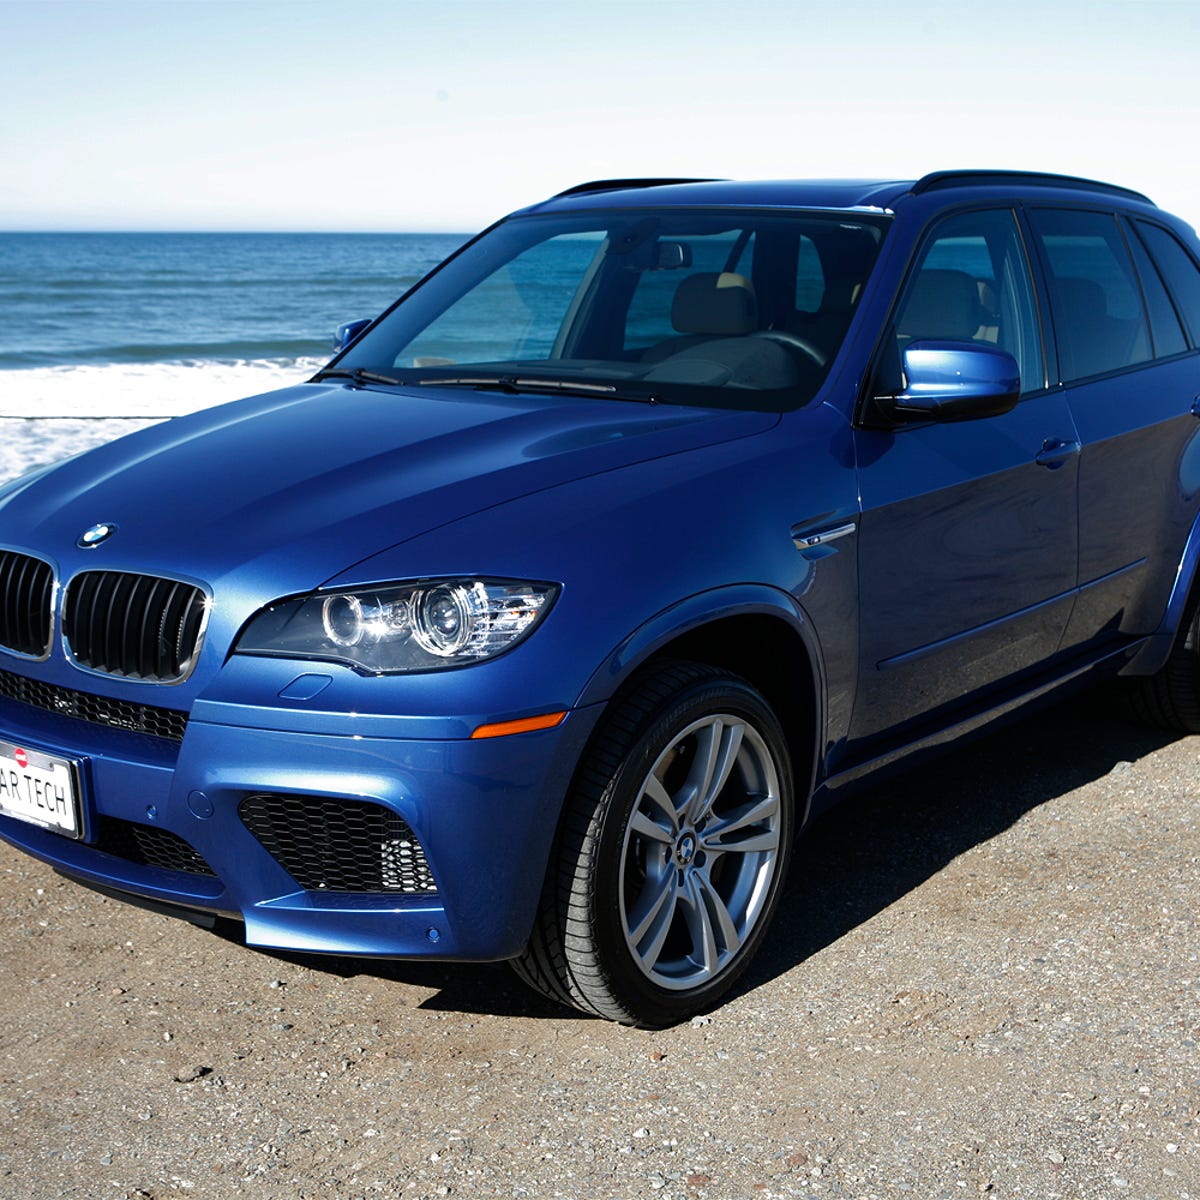 2010 BMW X5 M review: 2010 BMW X5 M - CNET